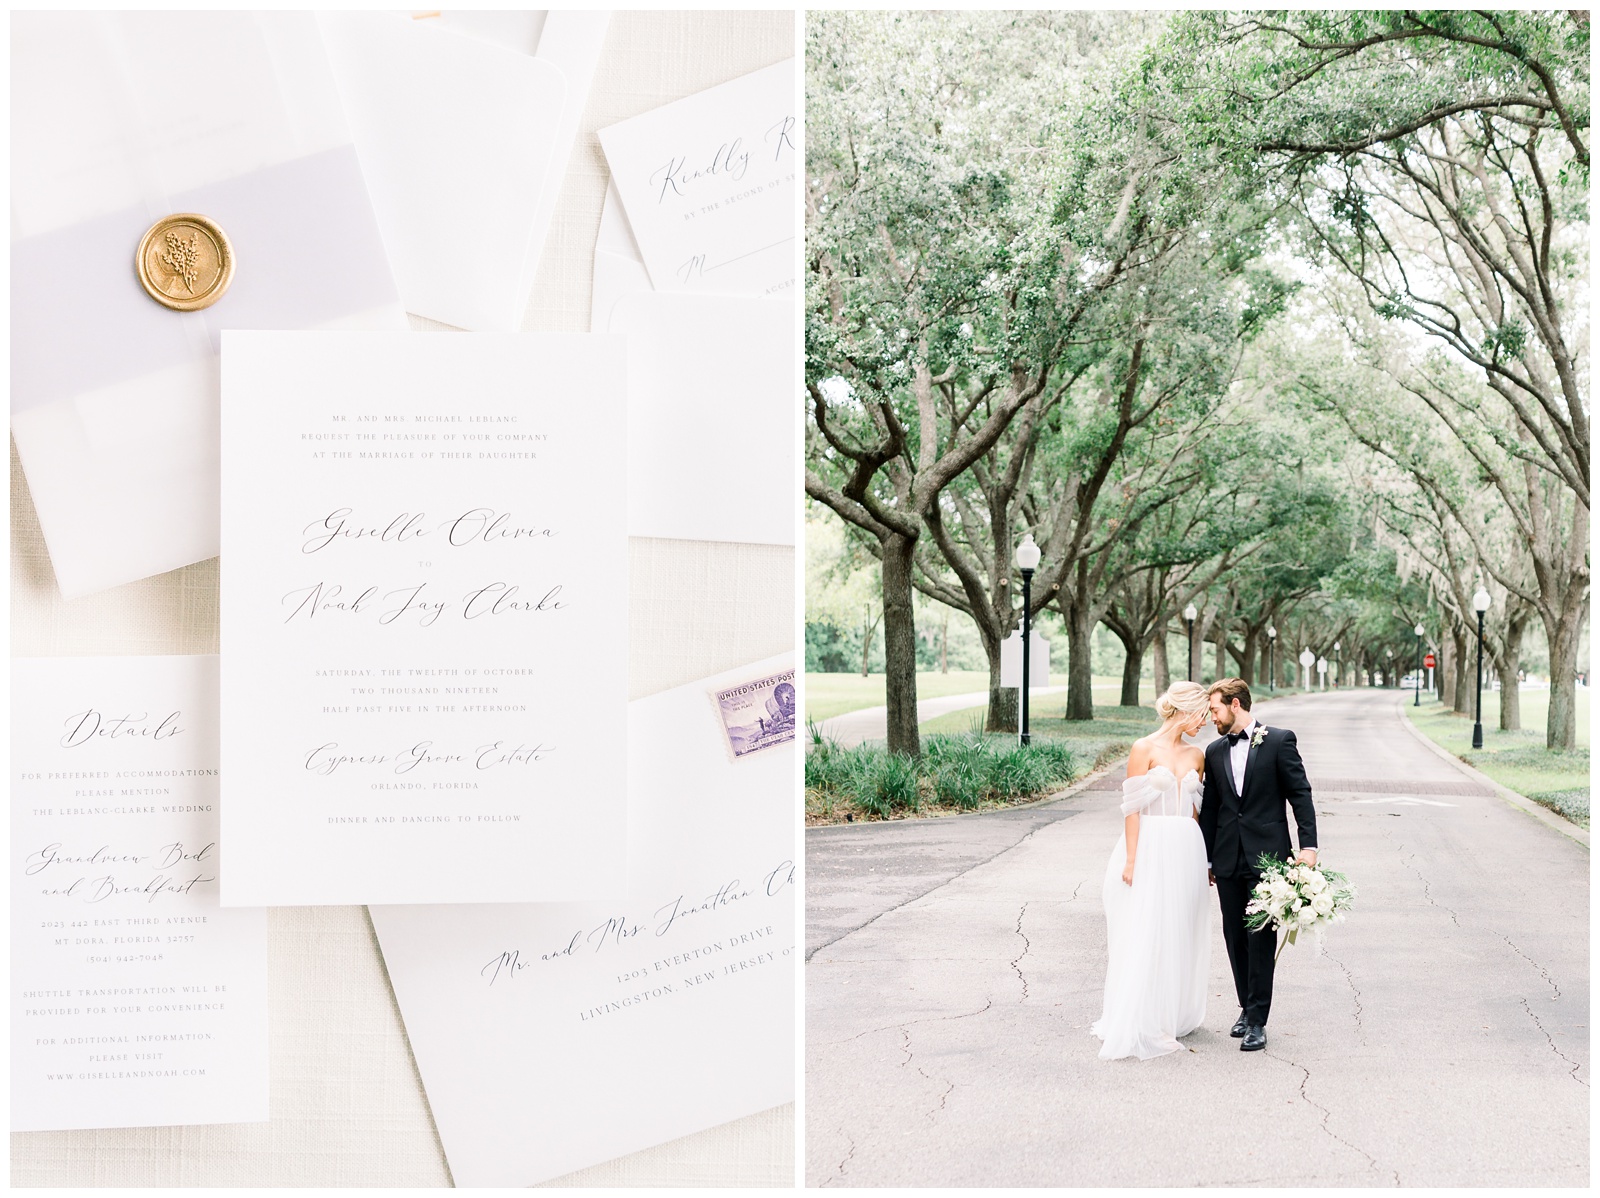 Shine wedding invitations at cypress grove estate